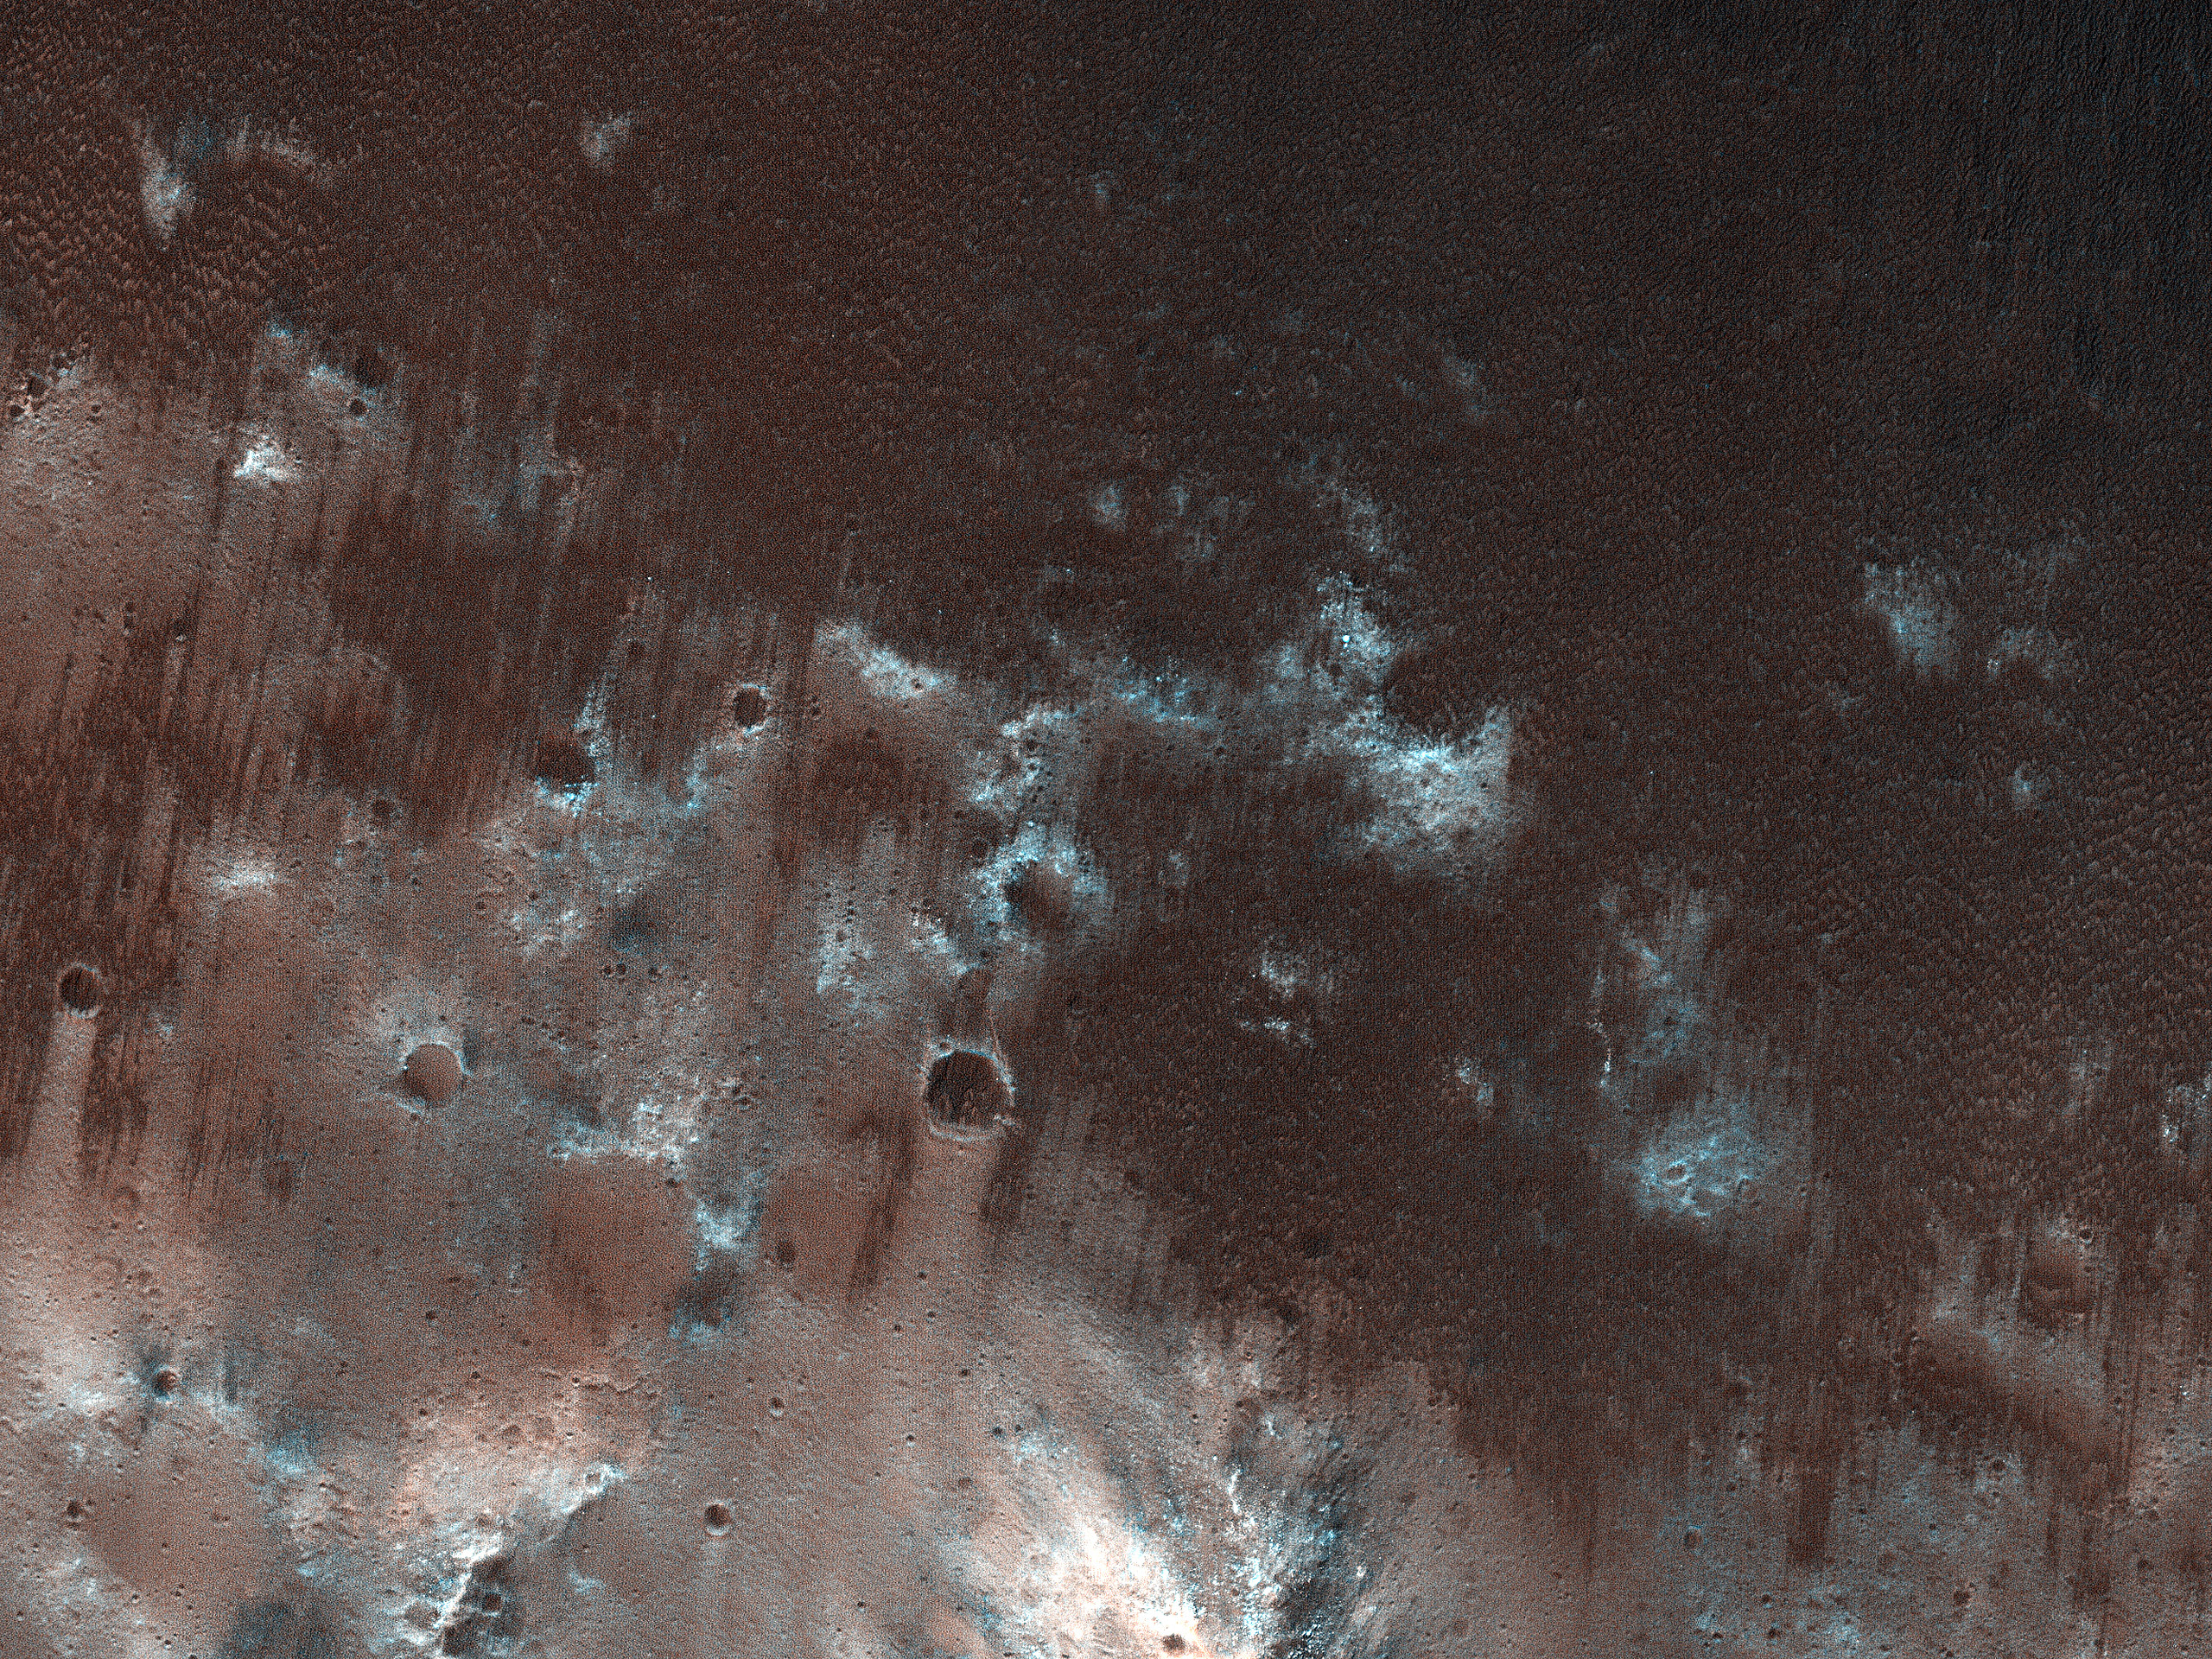 Exploring the Sandy Province of Herschel Crater